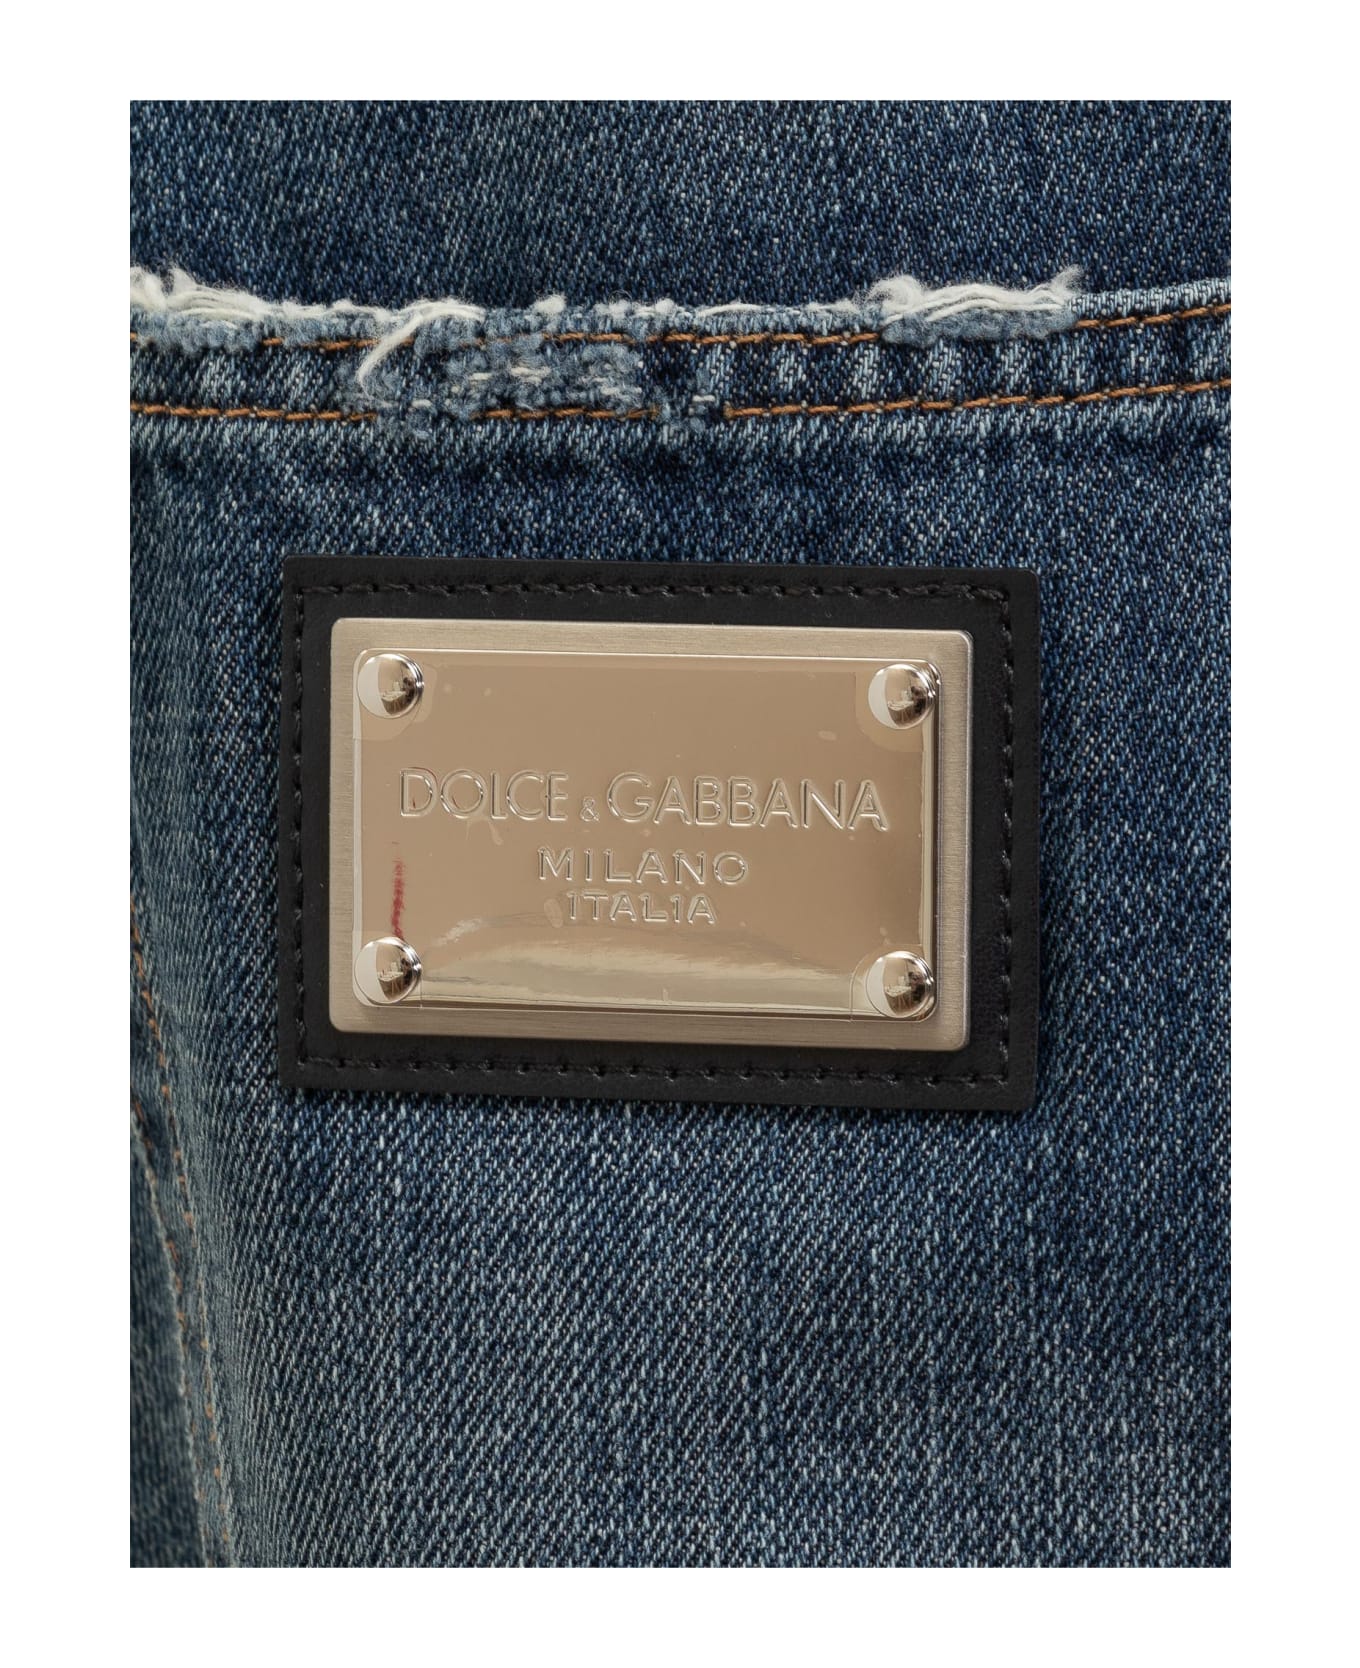 Dolce & Gabbana Denim Jeans With Abrasions - BLU